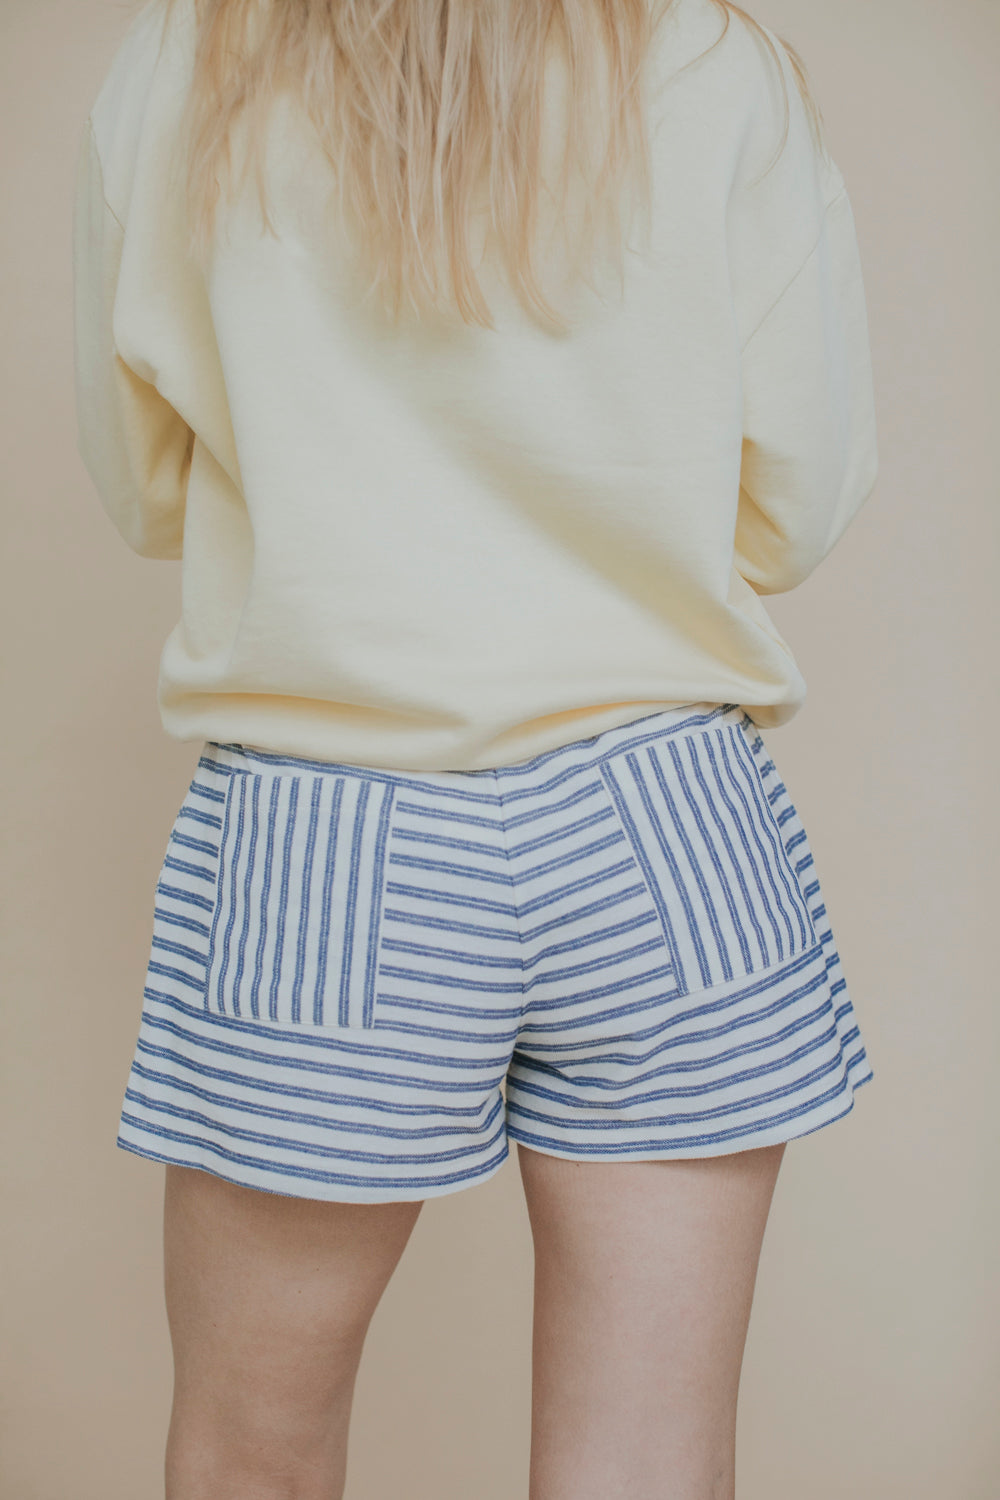 the dão store - Short Miri - Greek Stripes - Shorts